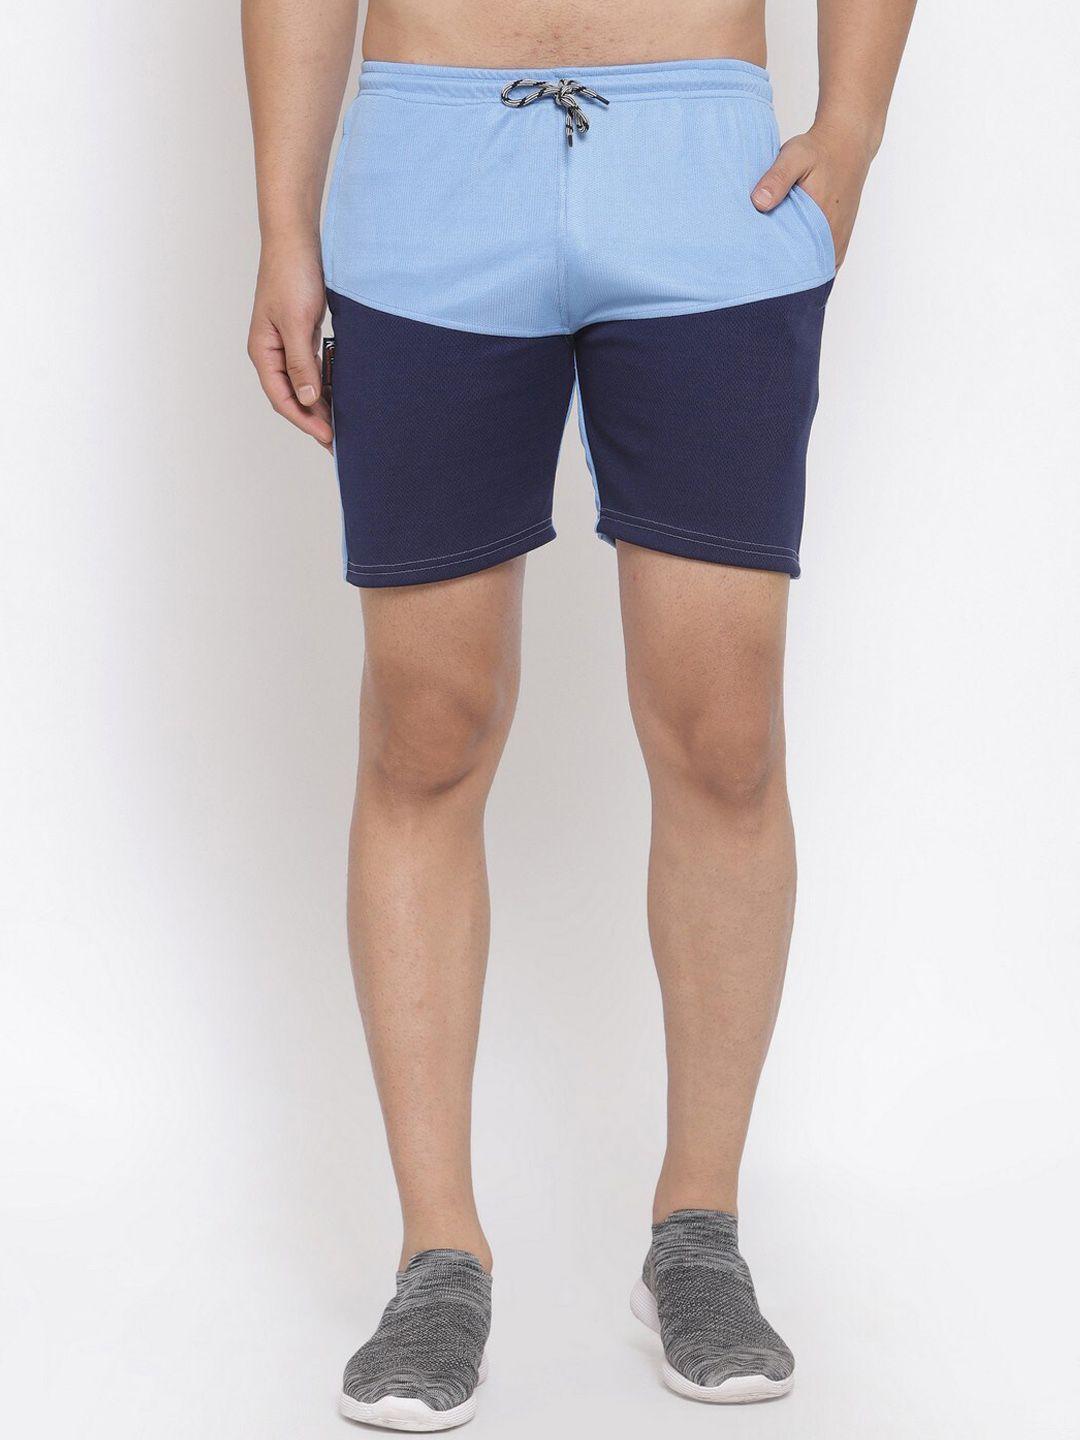 klotthe men colourblocked rapid-dry sports shorts